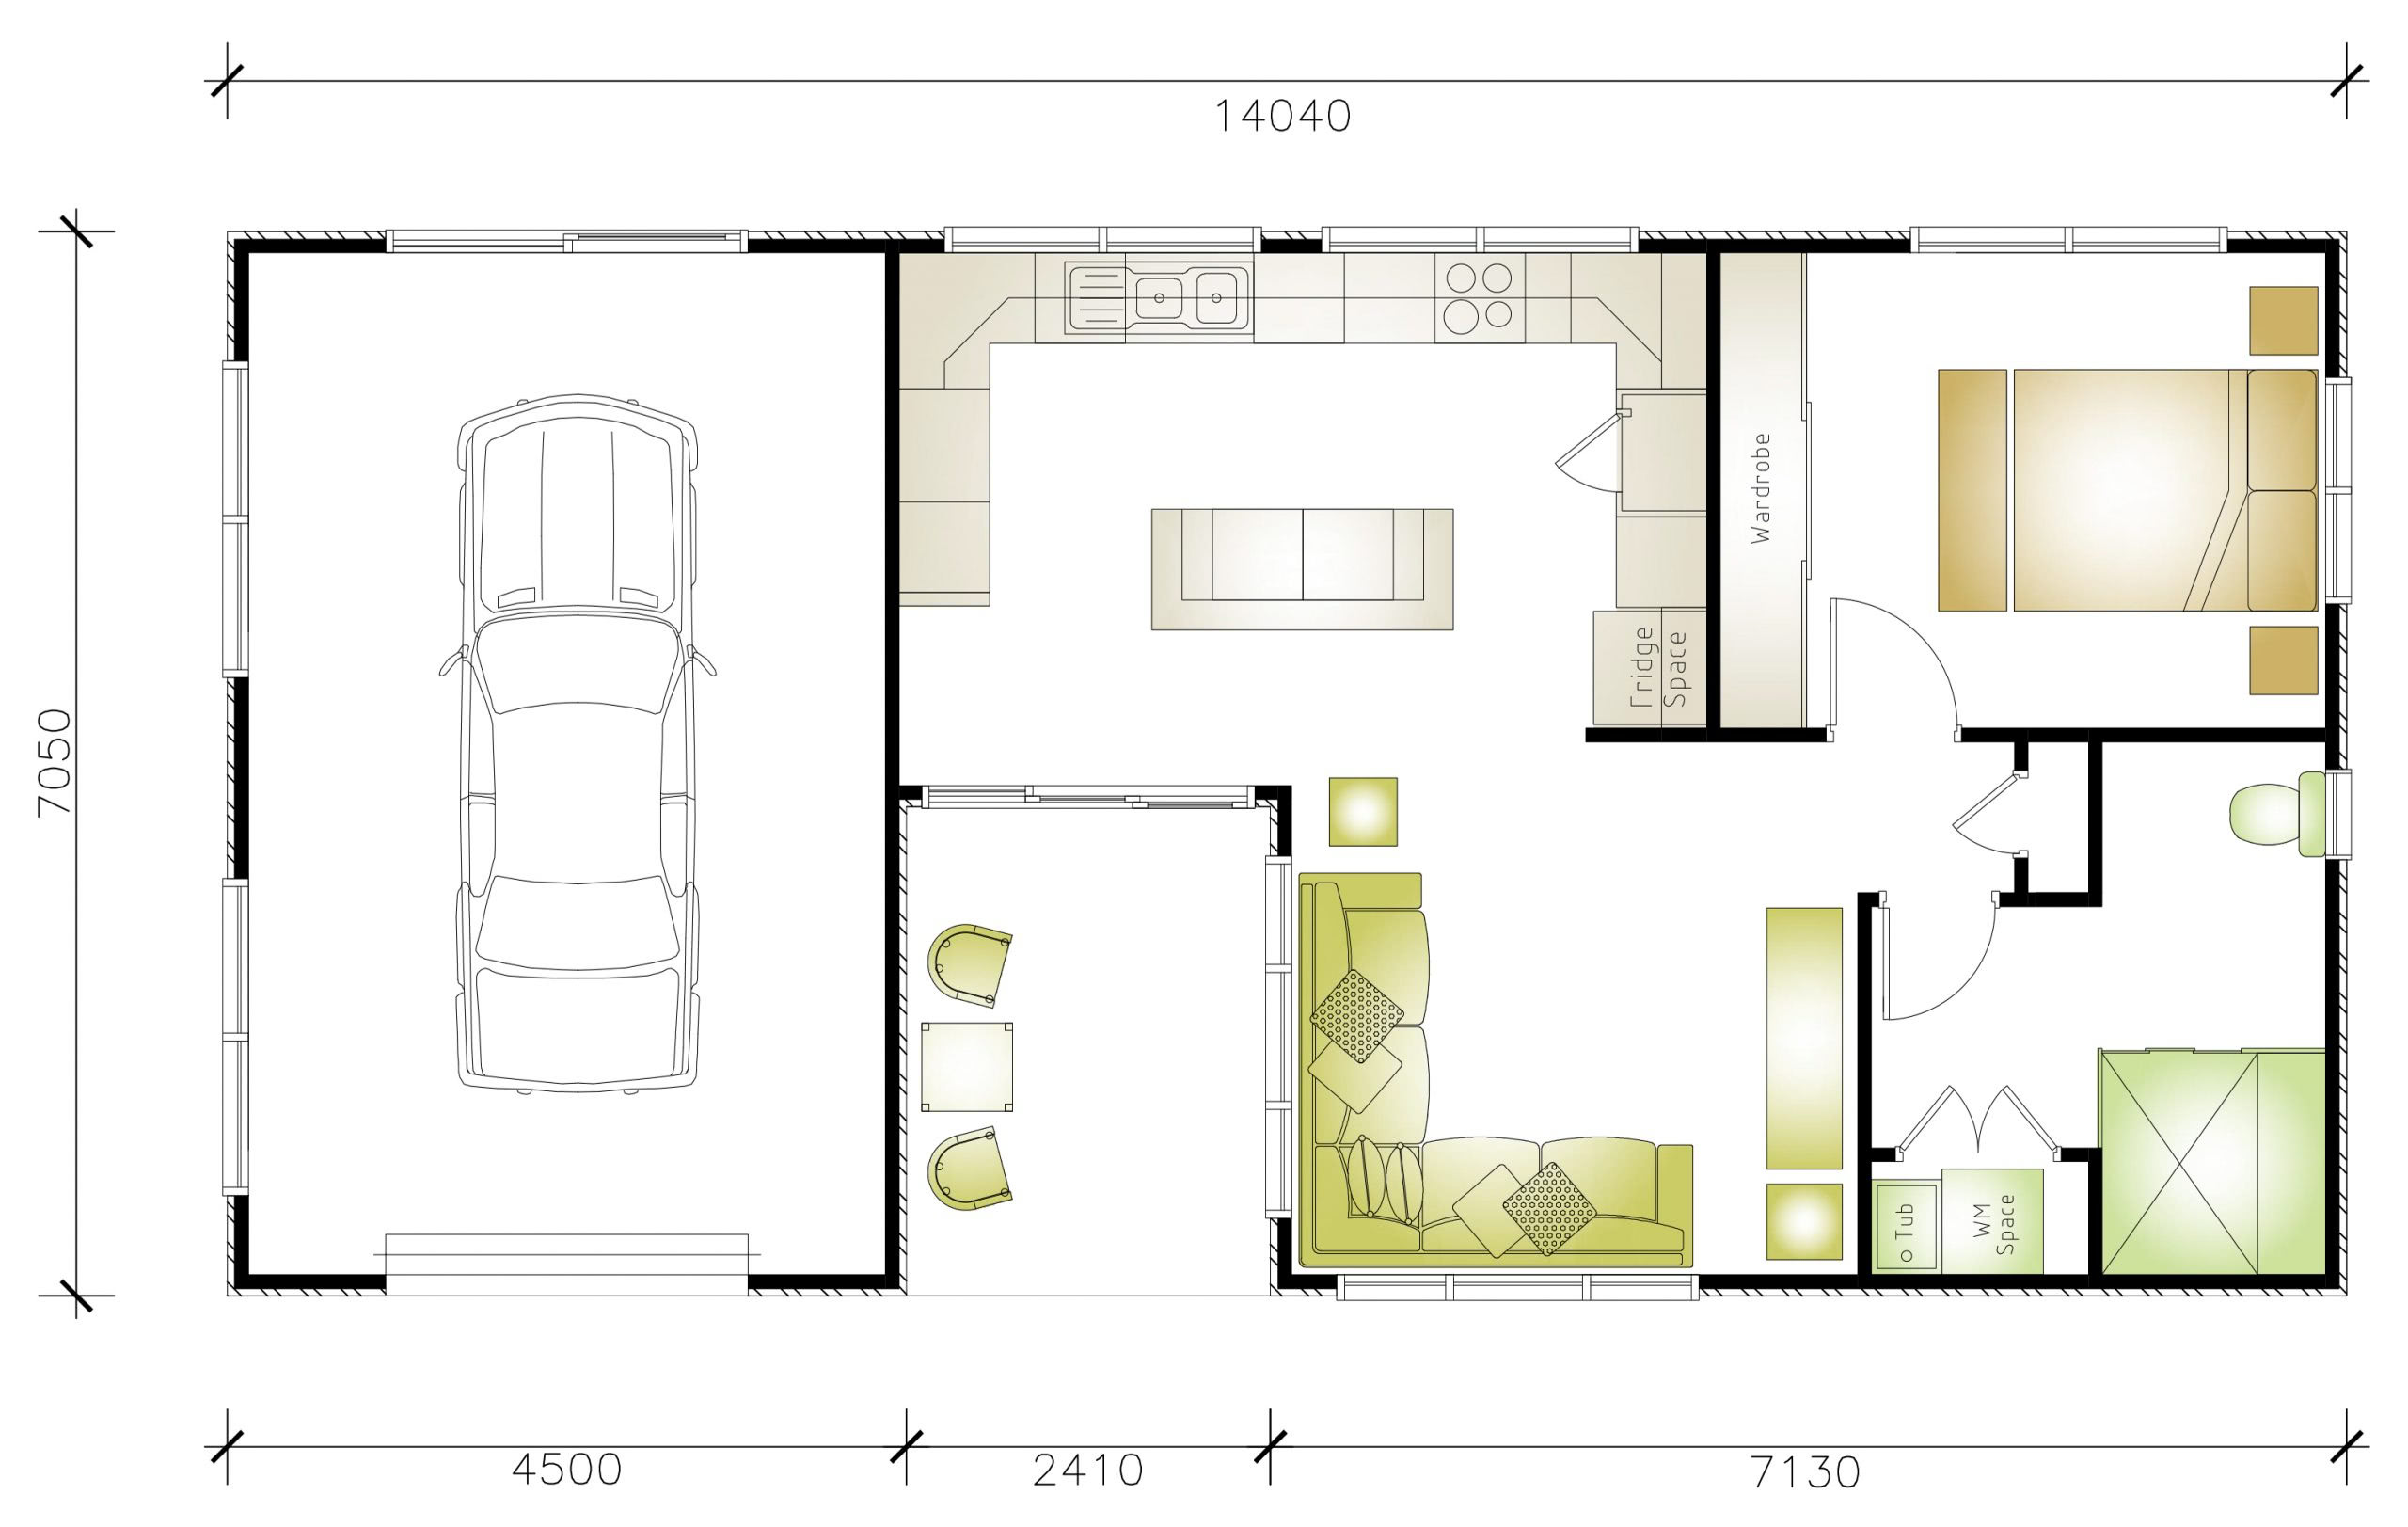 Granny flat floor plan with garage